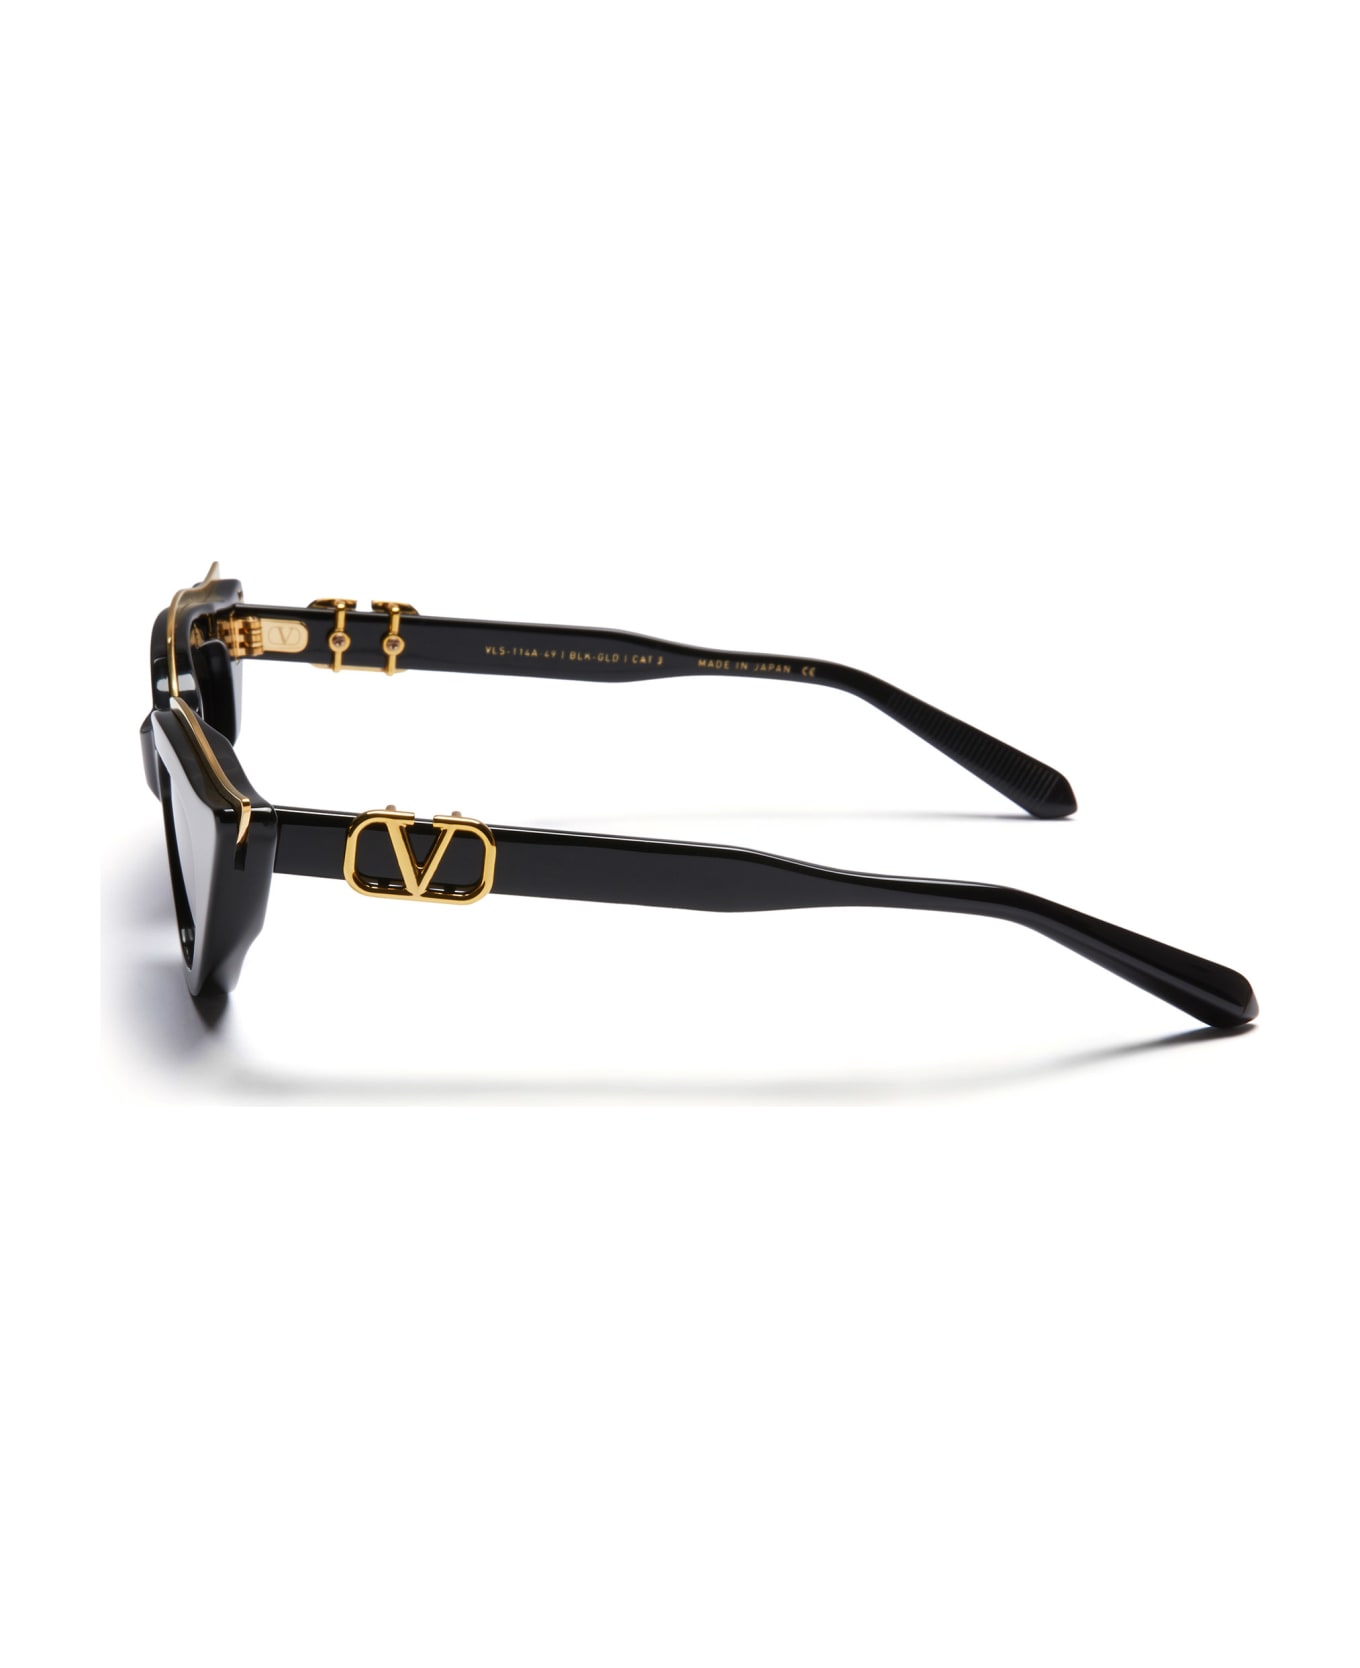 Valentino Eyewear V-goldcut Ii - Black/ Yellow Gold Sunglasses - Black/gold